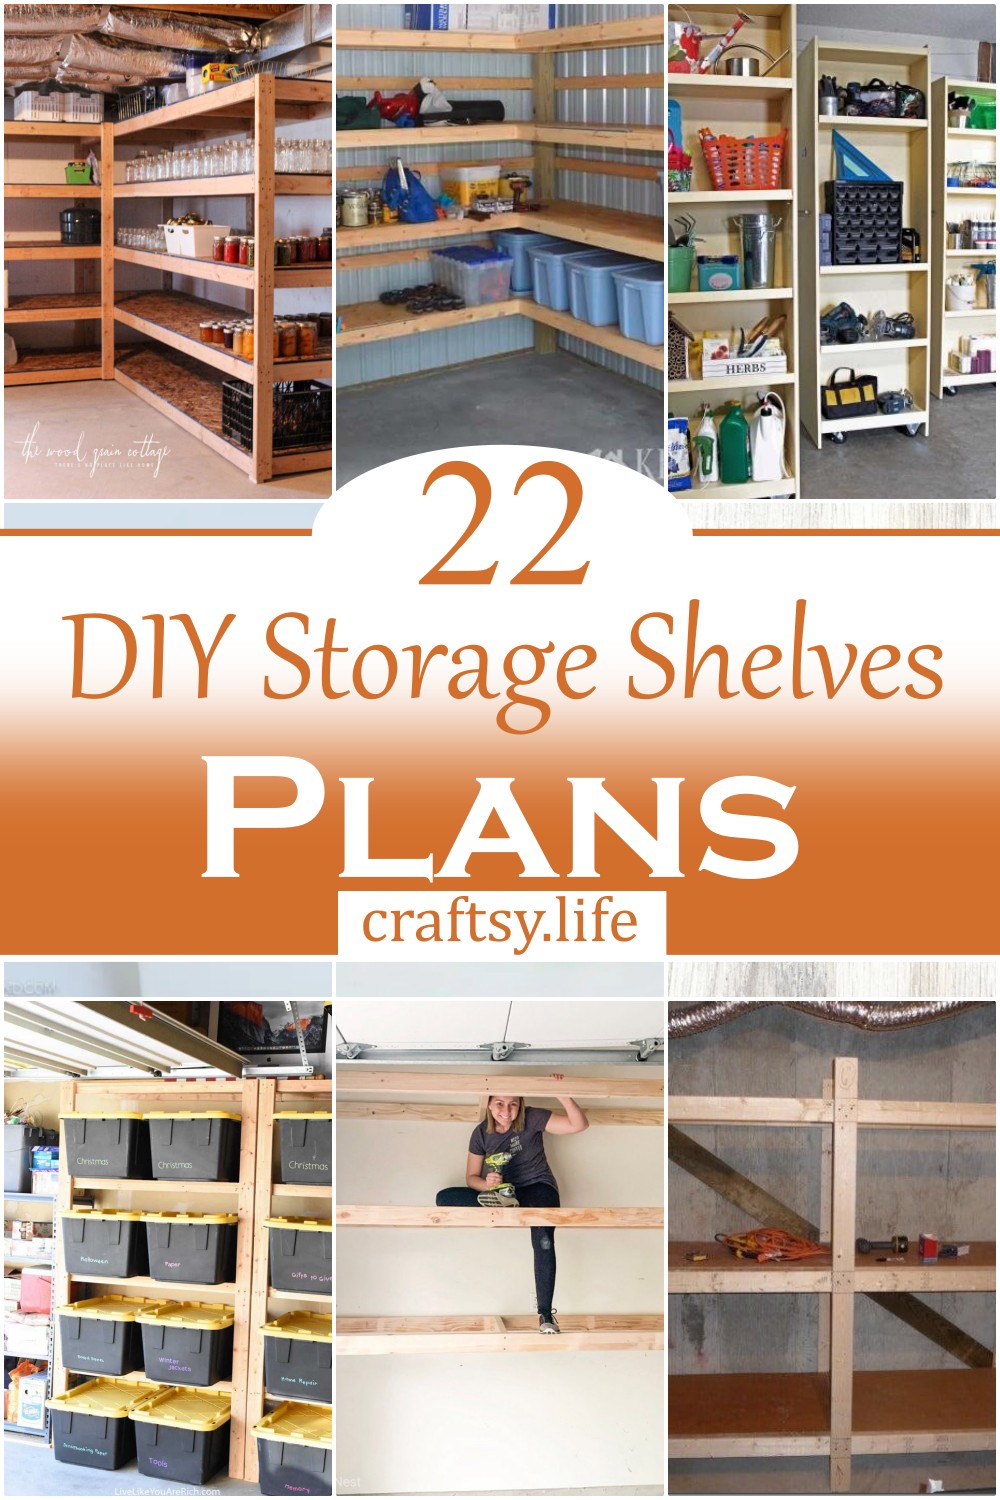 DIY Storage Shelves